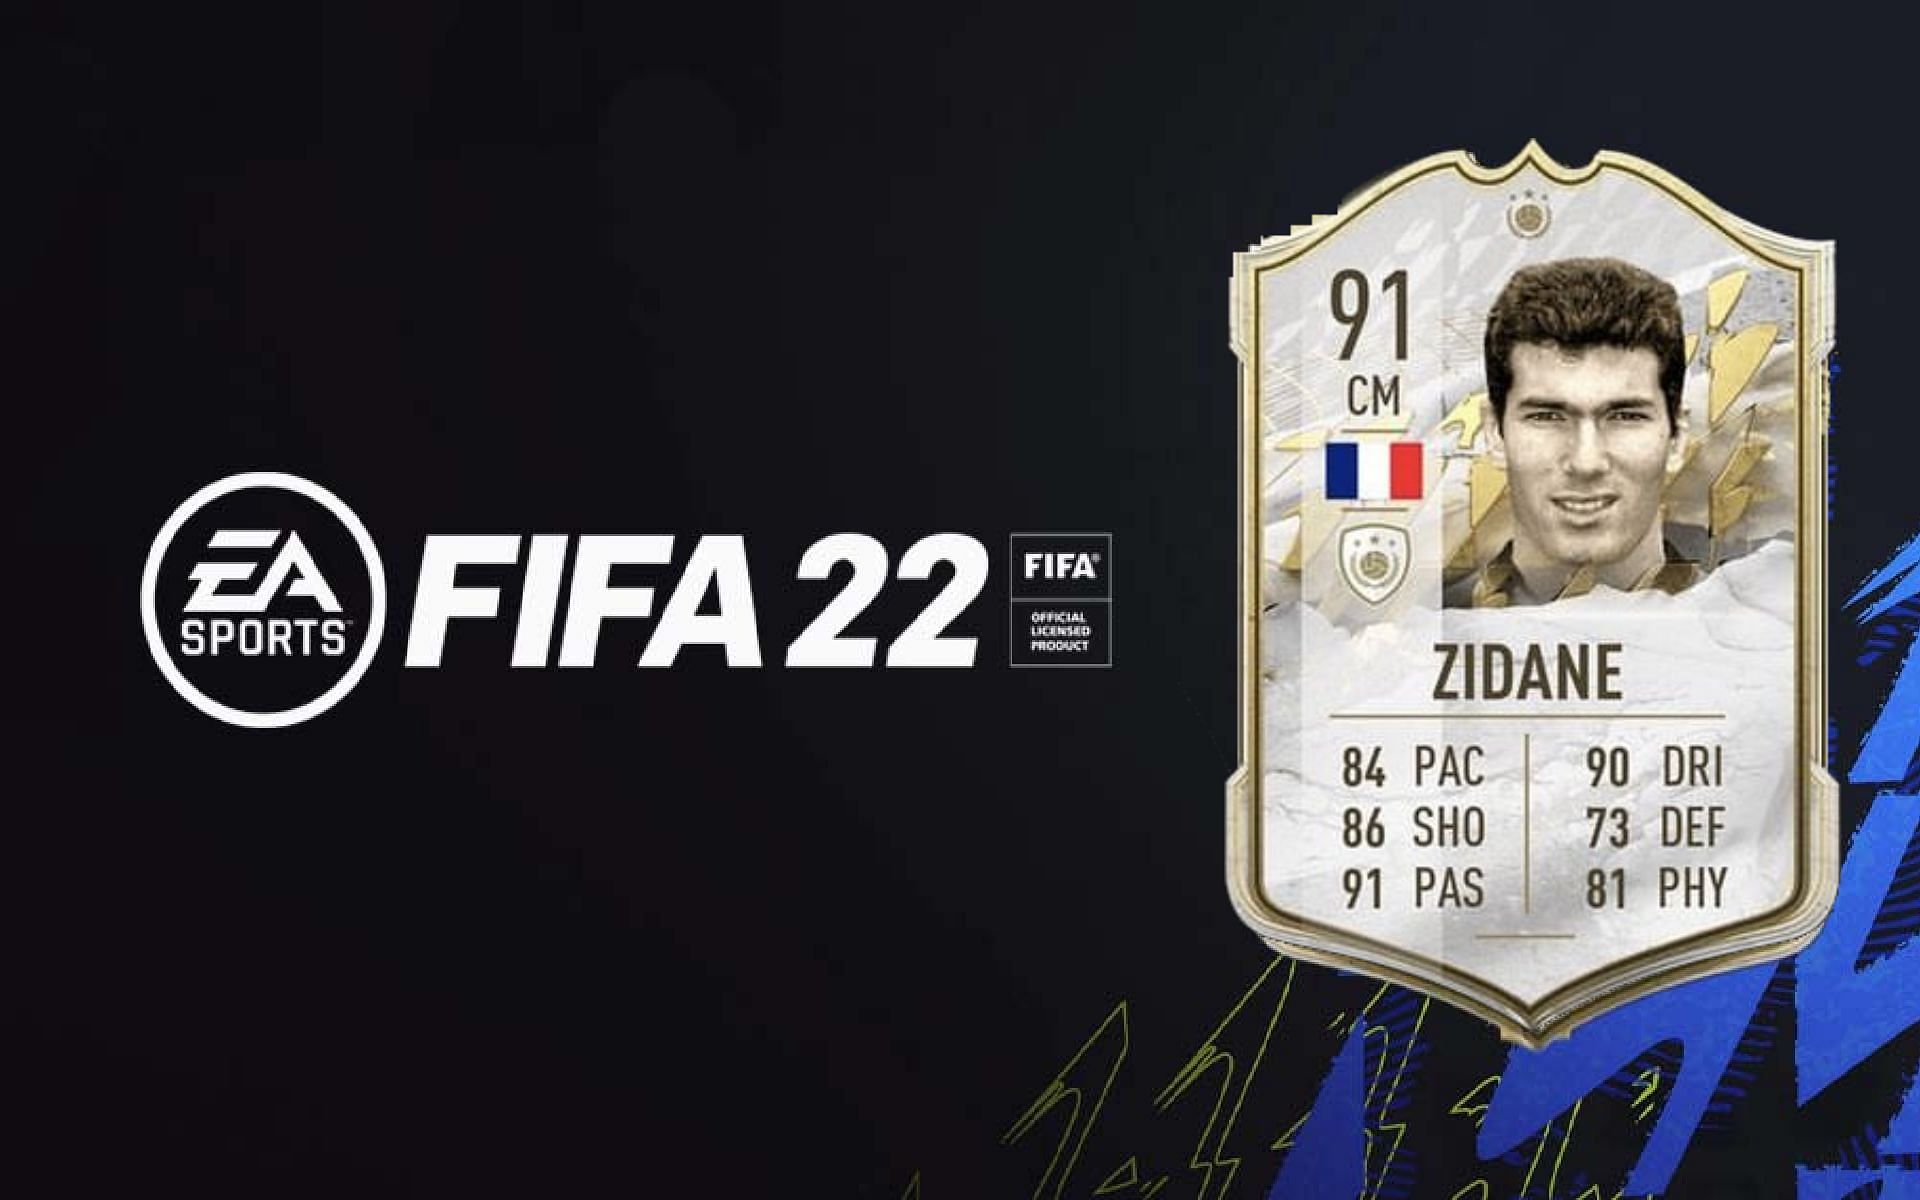 Zinedine Zidane Base icon SBC is now live in FIFA 22 (Image via Sportskeeda)